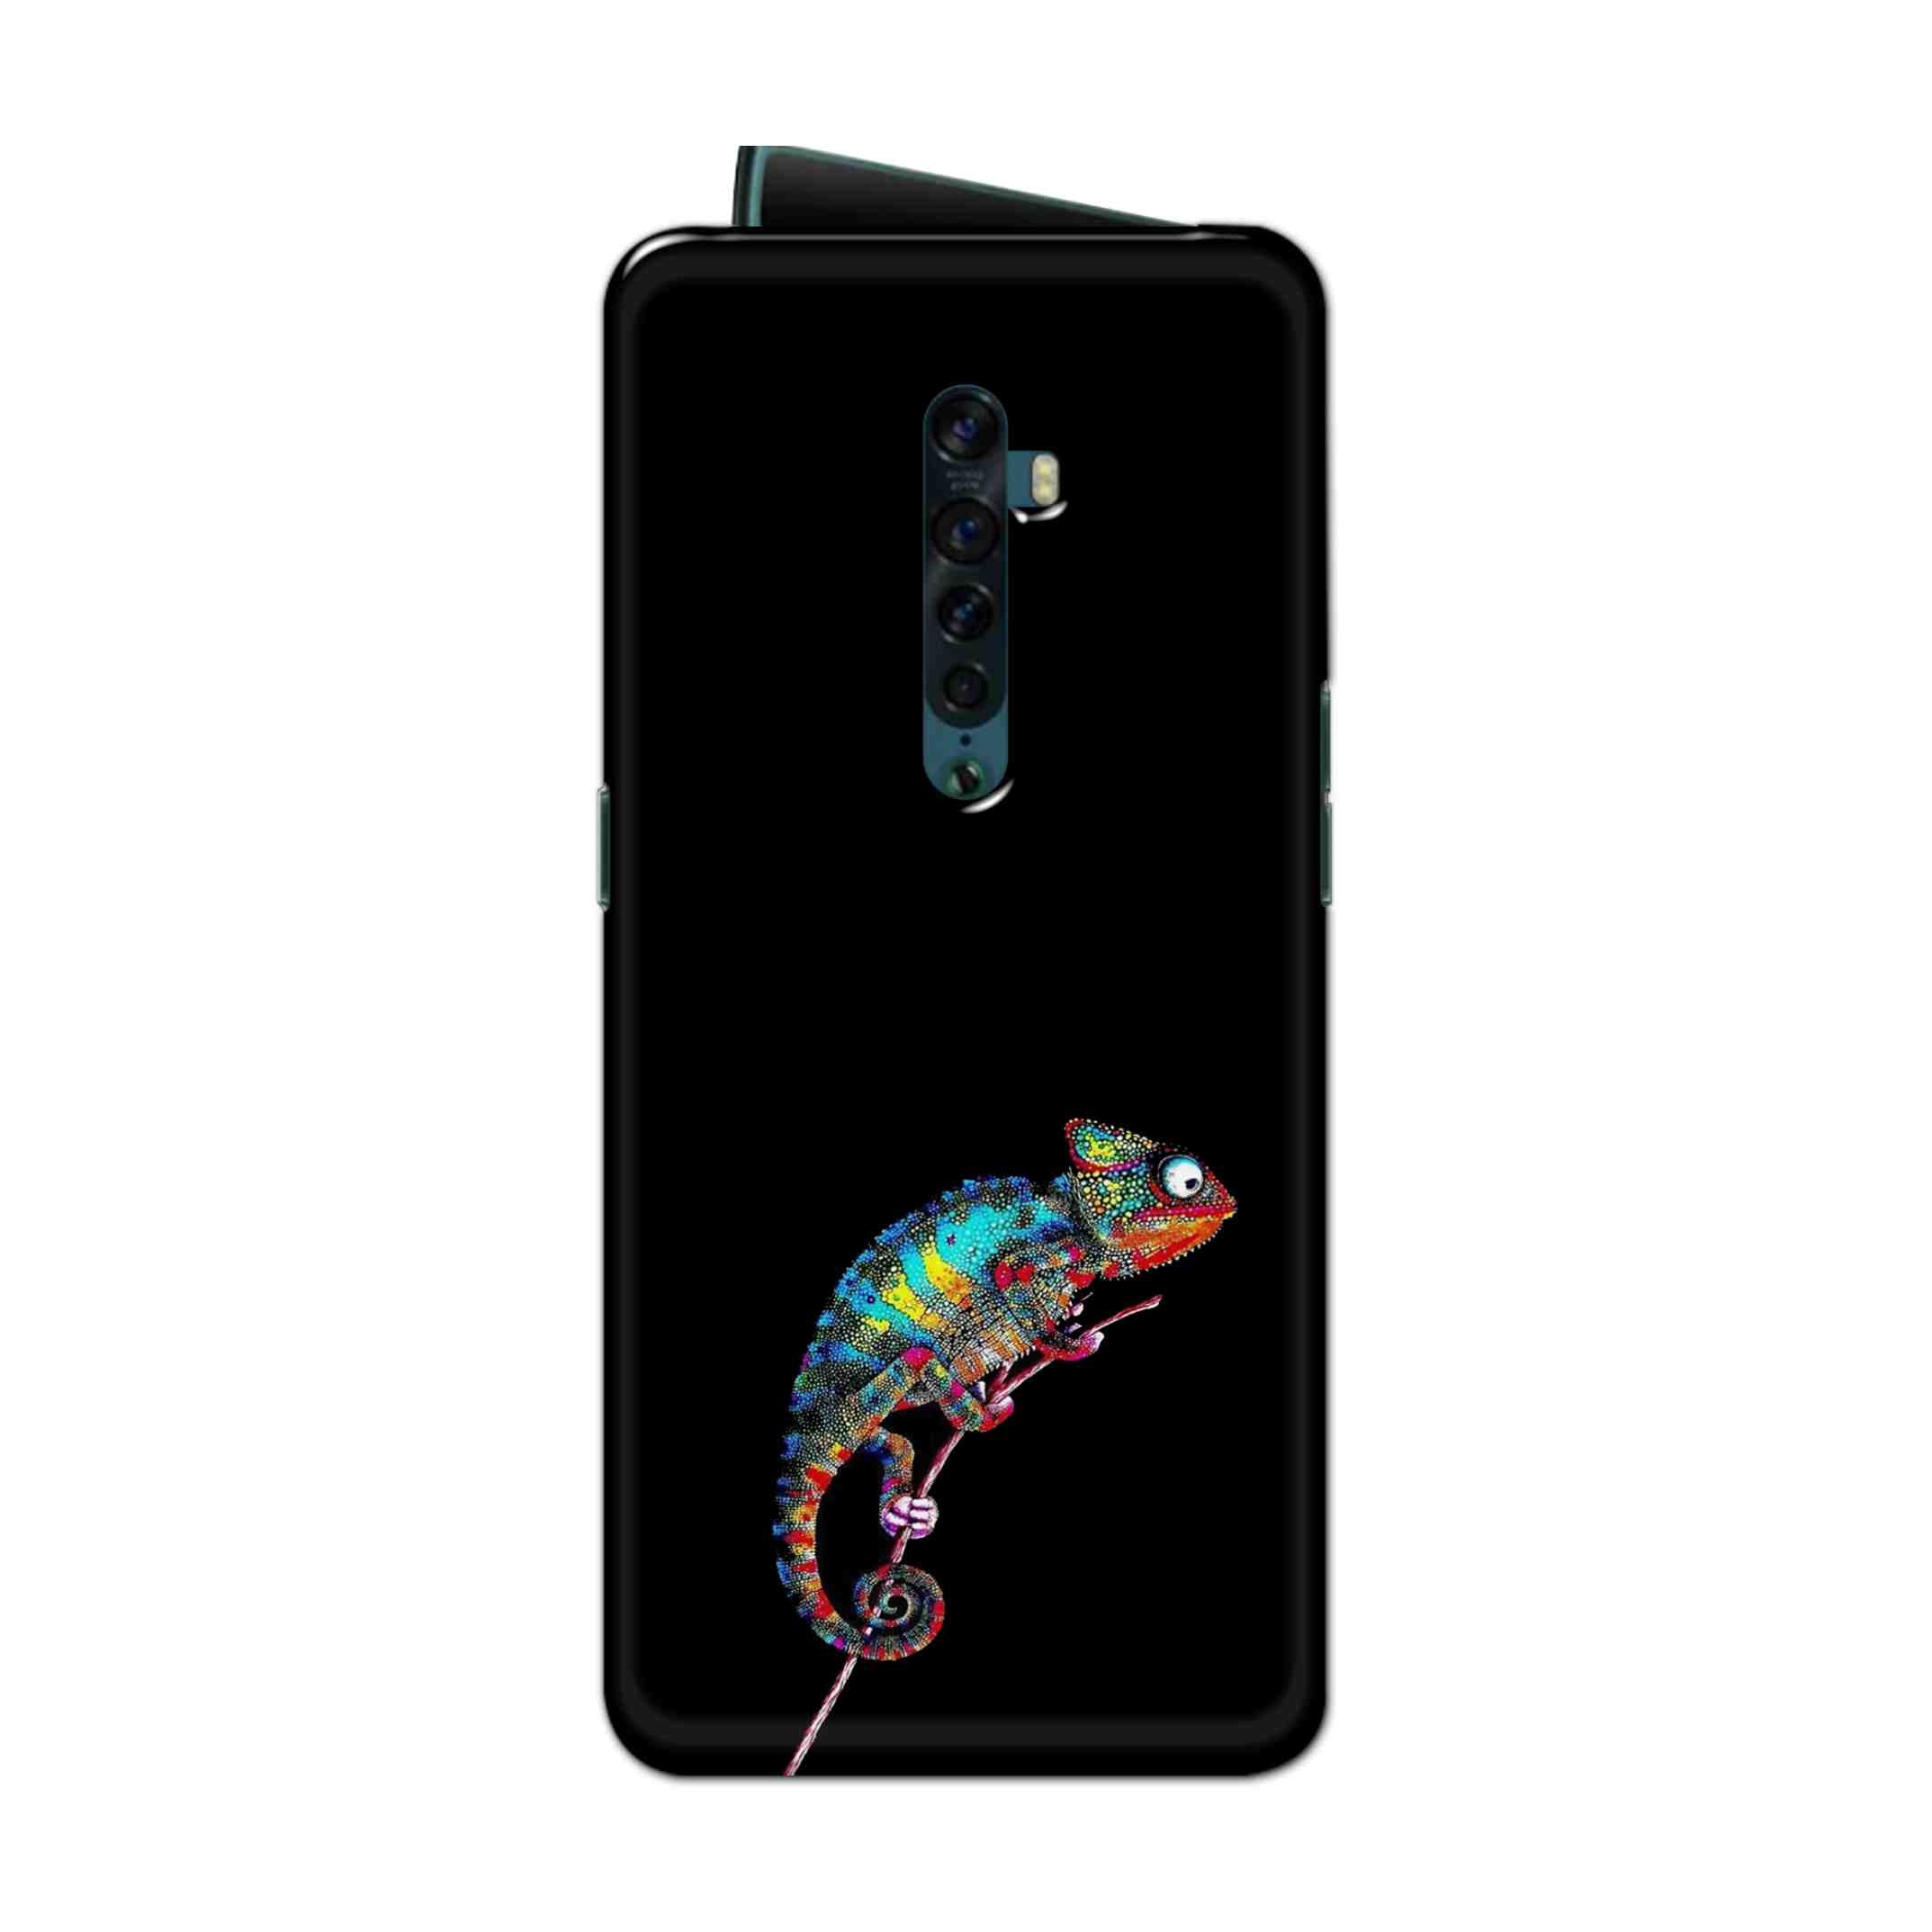 Buy Chamaeleon Hard Back Mobile Phone Case Cover For Oppo Reno 2 Online